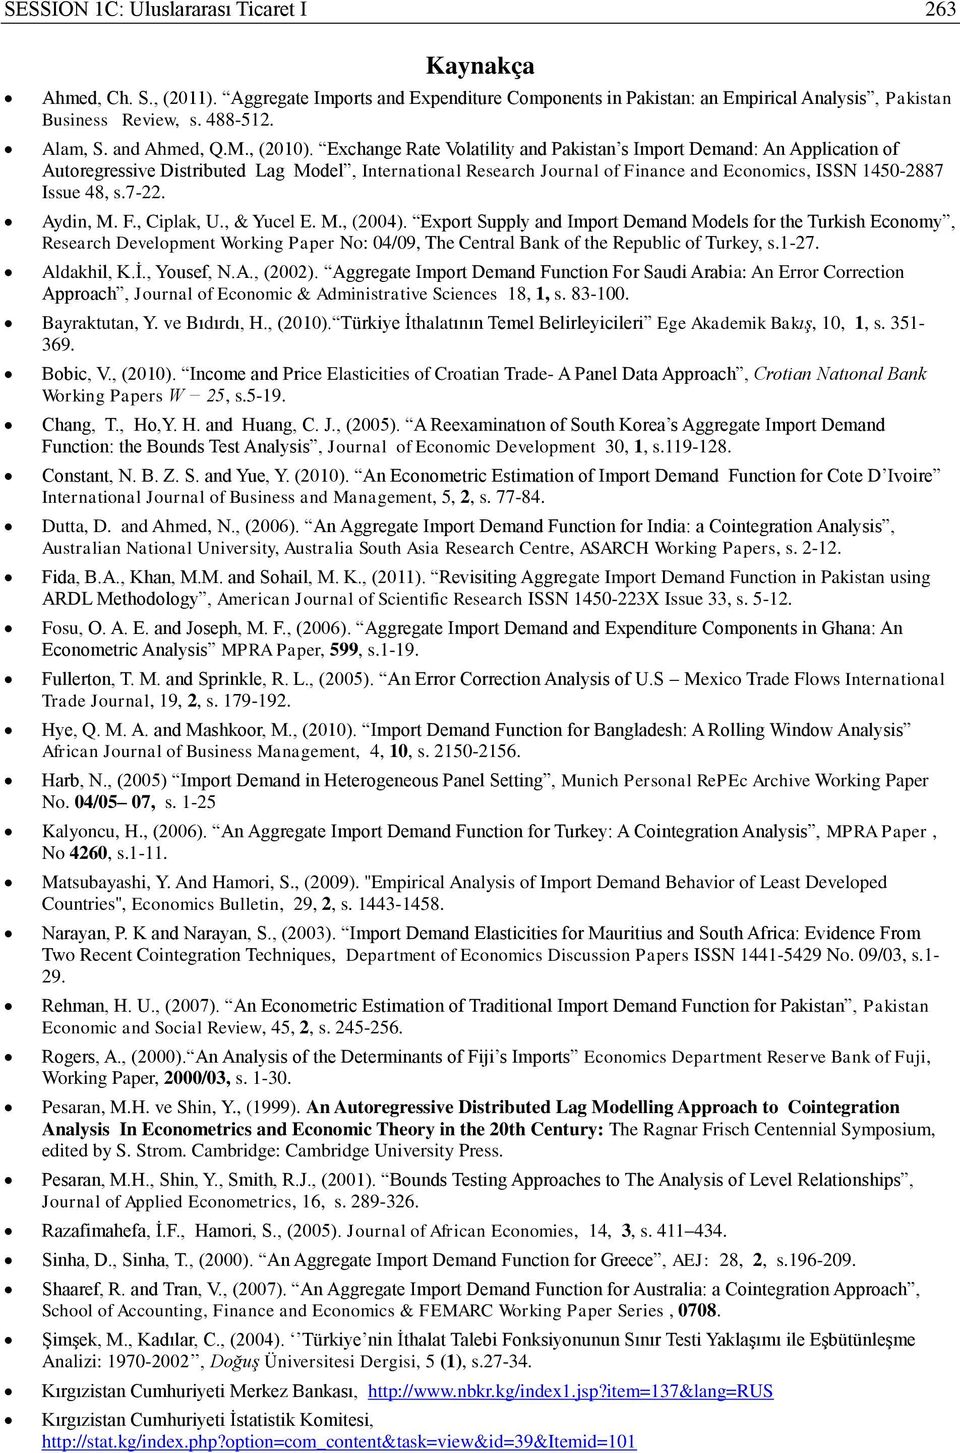 Echage Rae Volailiy ad Pakisa s Impor Demad: A Applicaio of Auoregressive Disribued Lag Model, Ieraioal Research Joural of Fiace ad Ecoomics, ISSN 45-2887 Issue 48, s.7-22. Aydi, M. F., Ciplak, U.